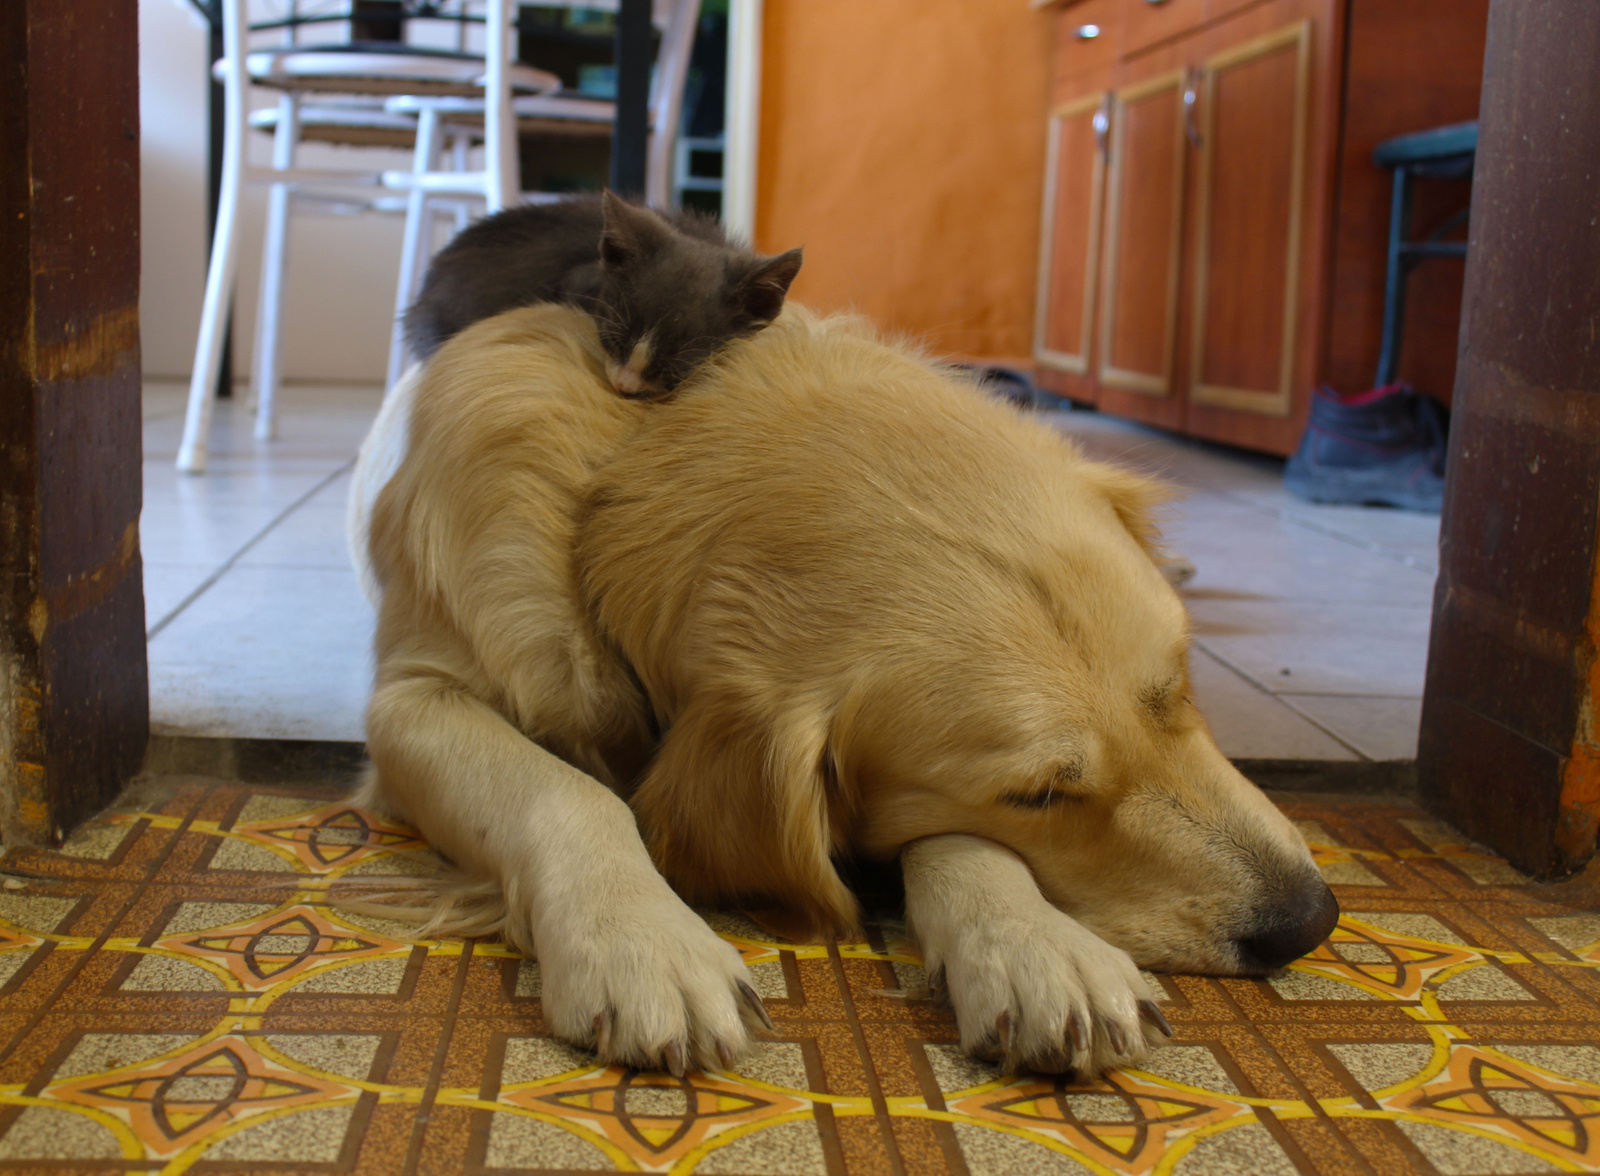 kutya-macska barátság